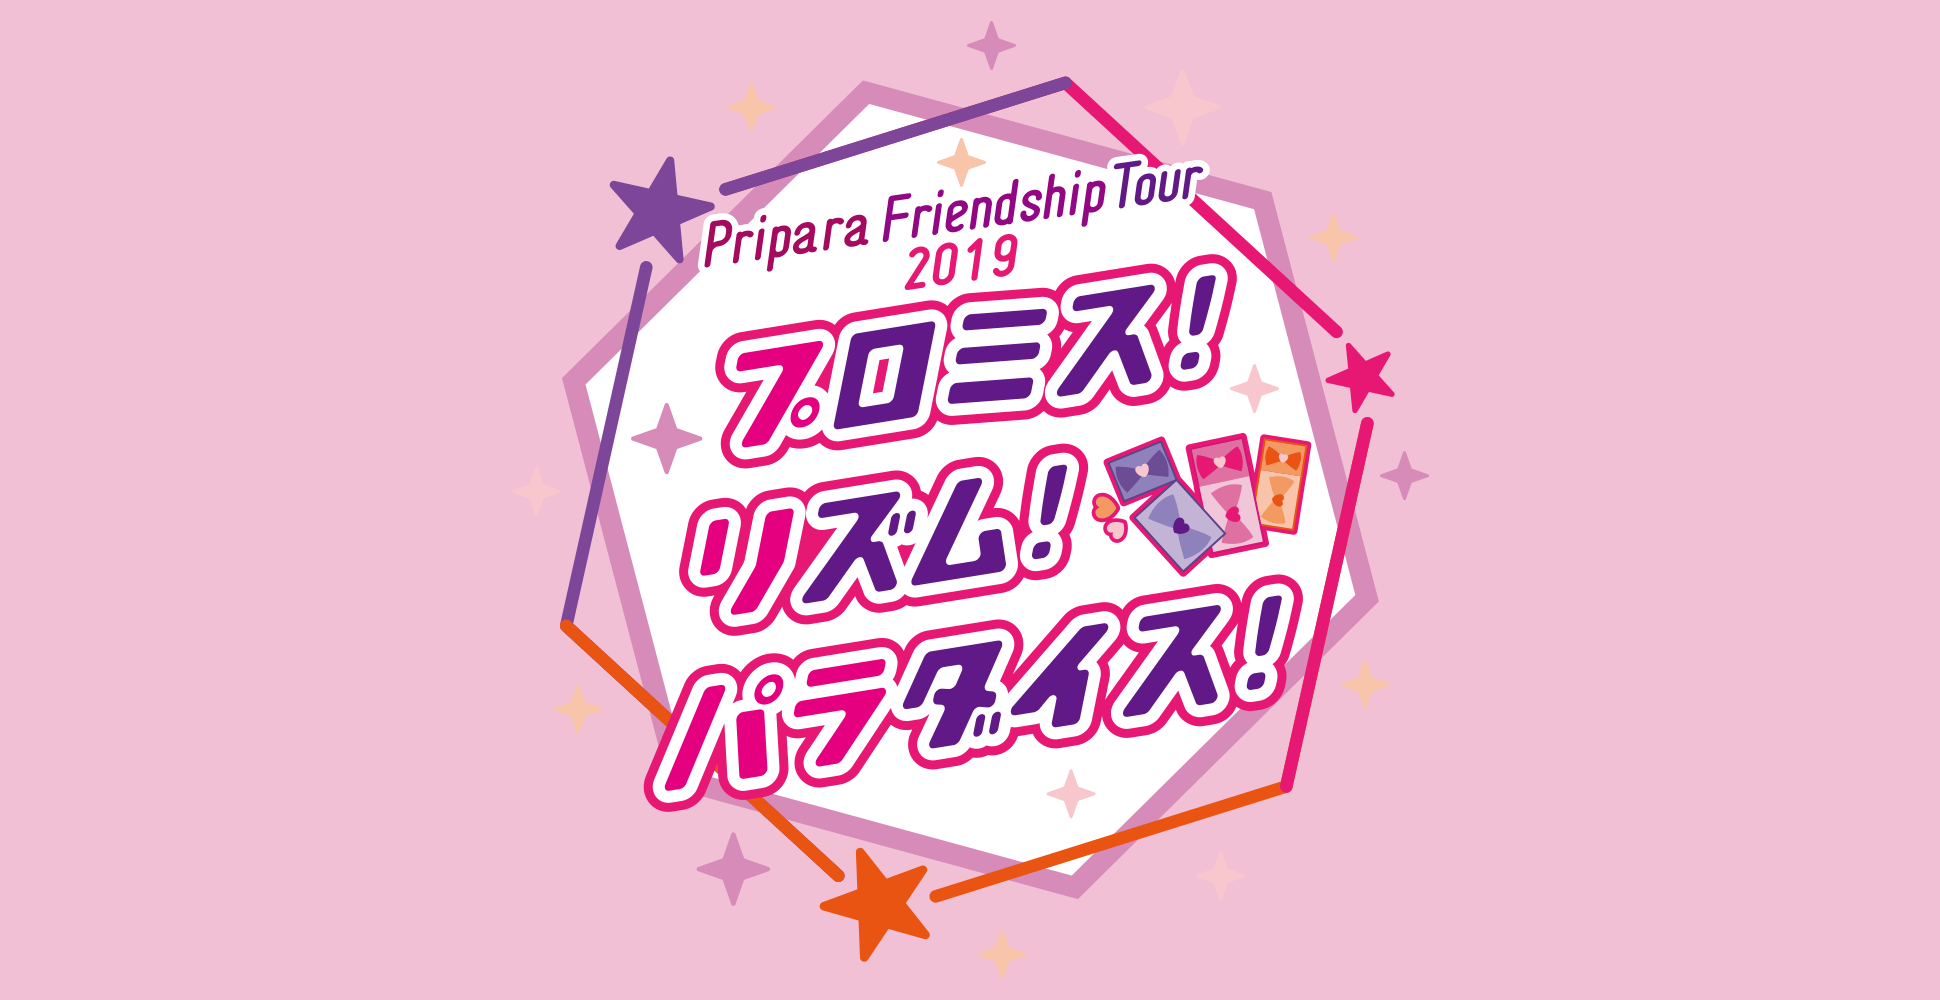 Pripara Friendship Tour 2019　プロミス！リズム！パラダイス！ 大阪 Zepp Osaka Bayside チケット付き ツアー参加者特典付き！JTBオフィシャルツアー<